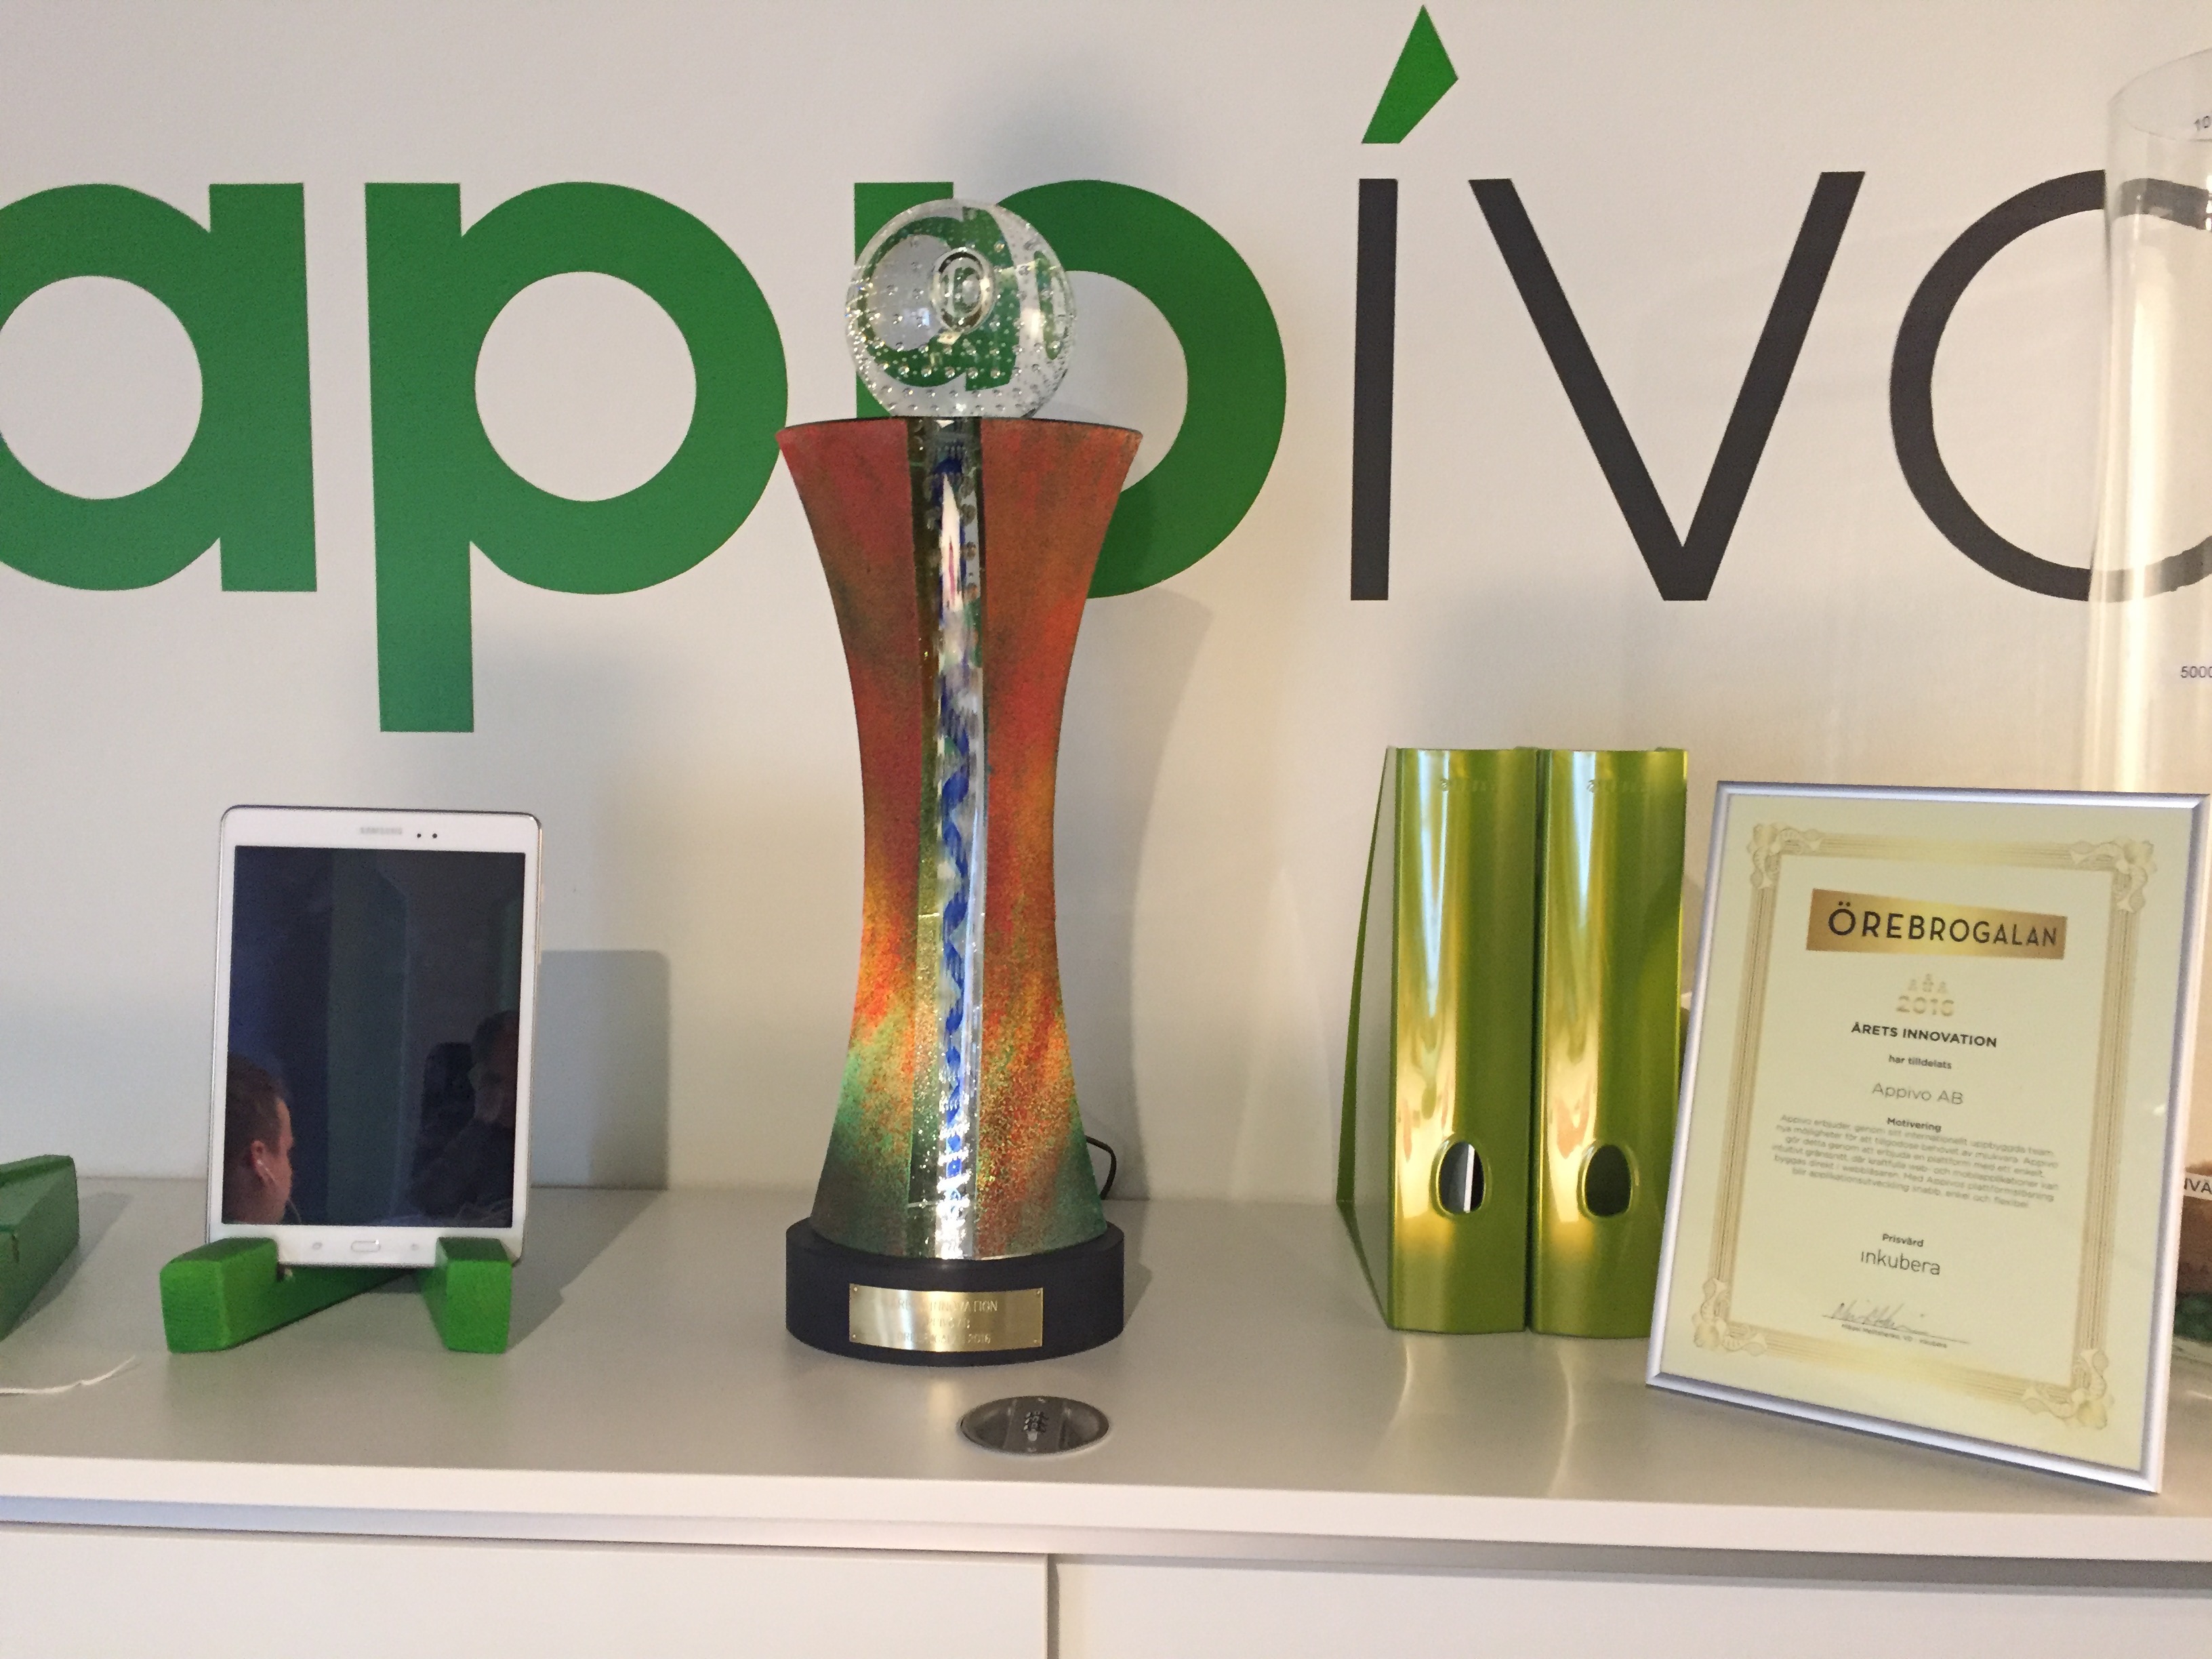 Appivo - Örebrogalan 2016 Innovation of the Year